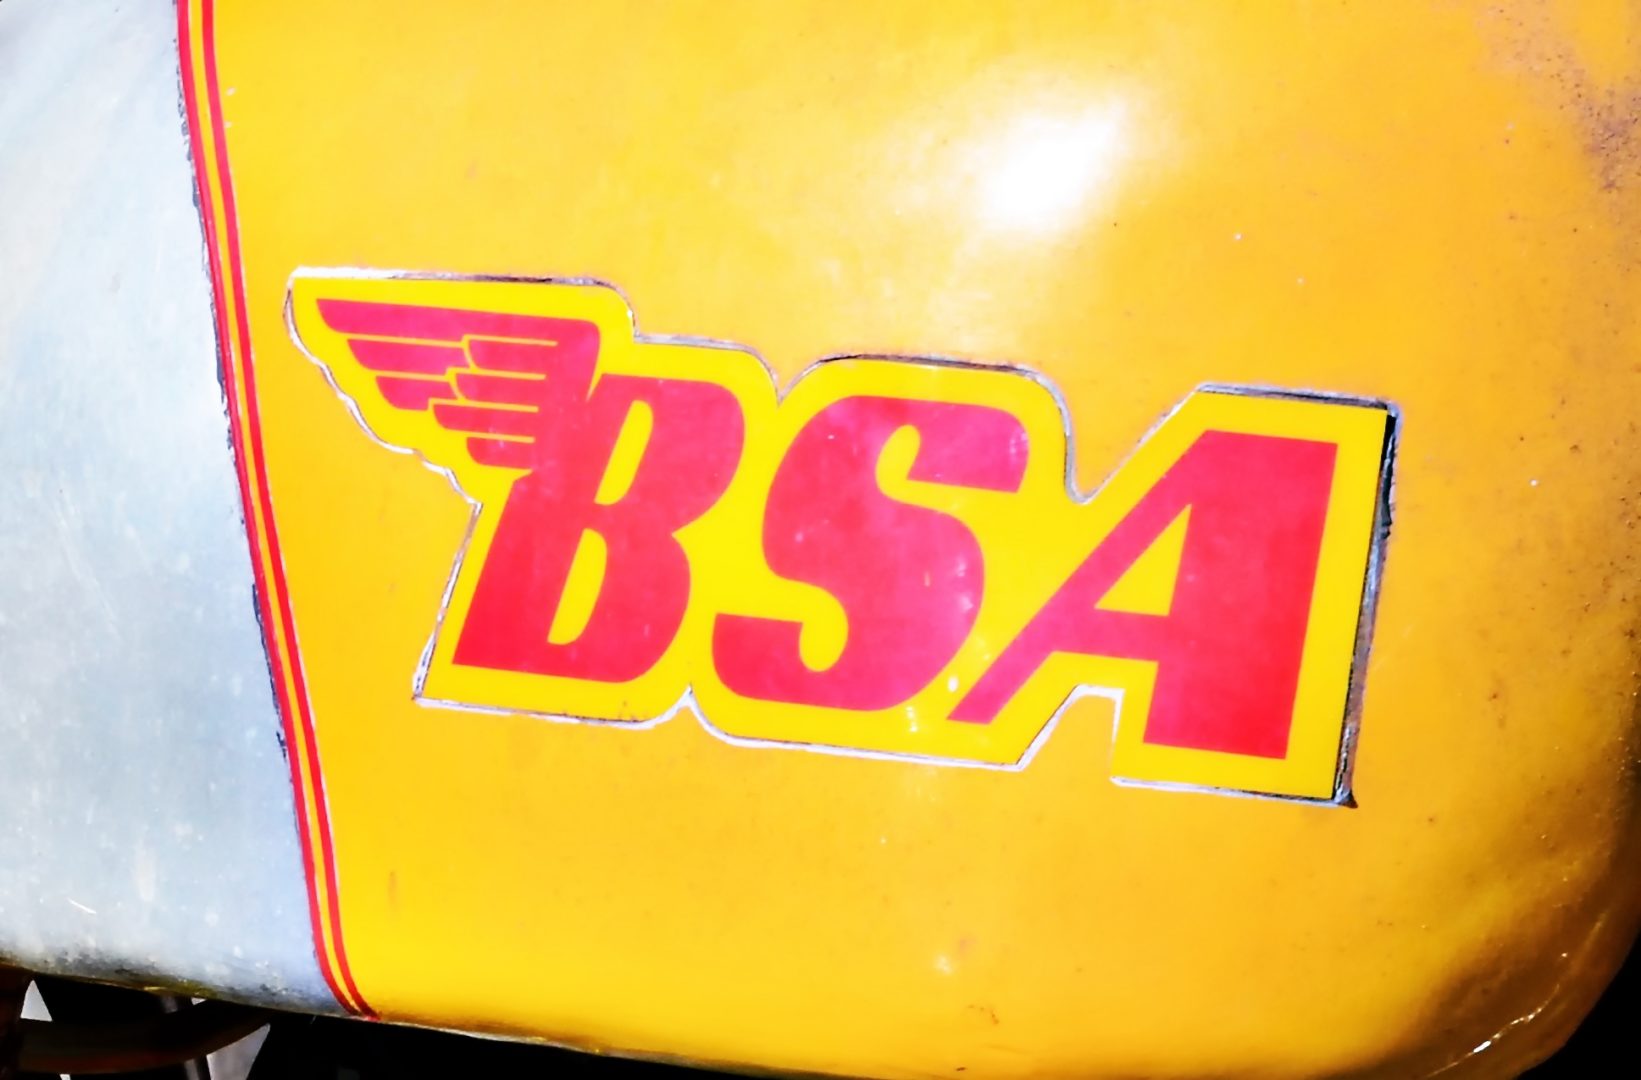 BSA logos